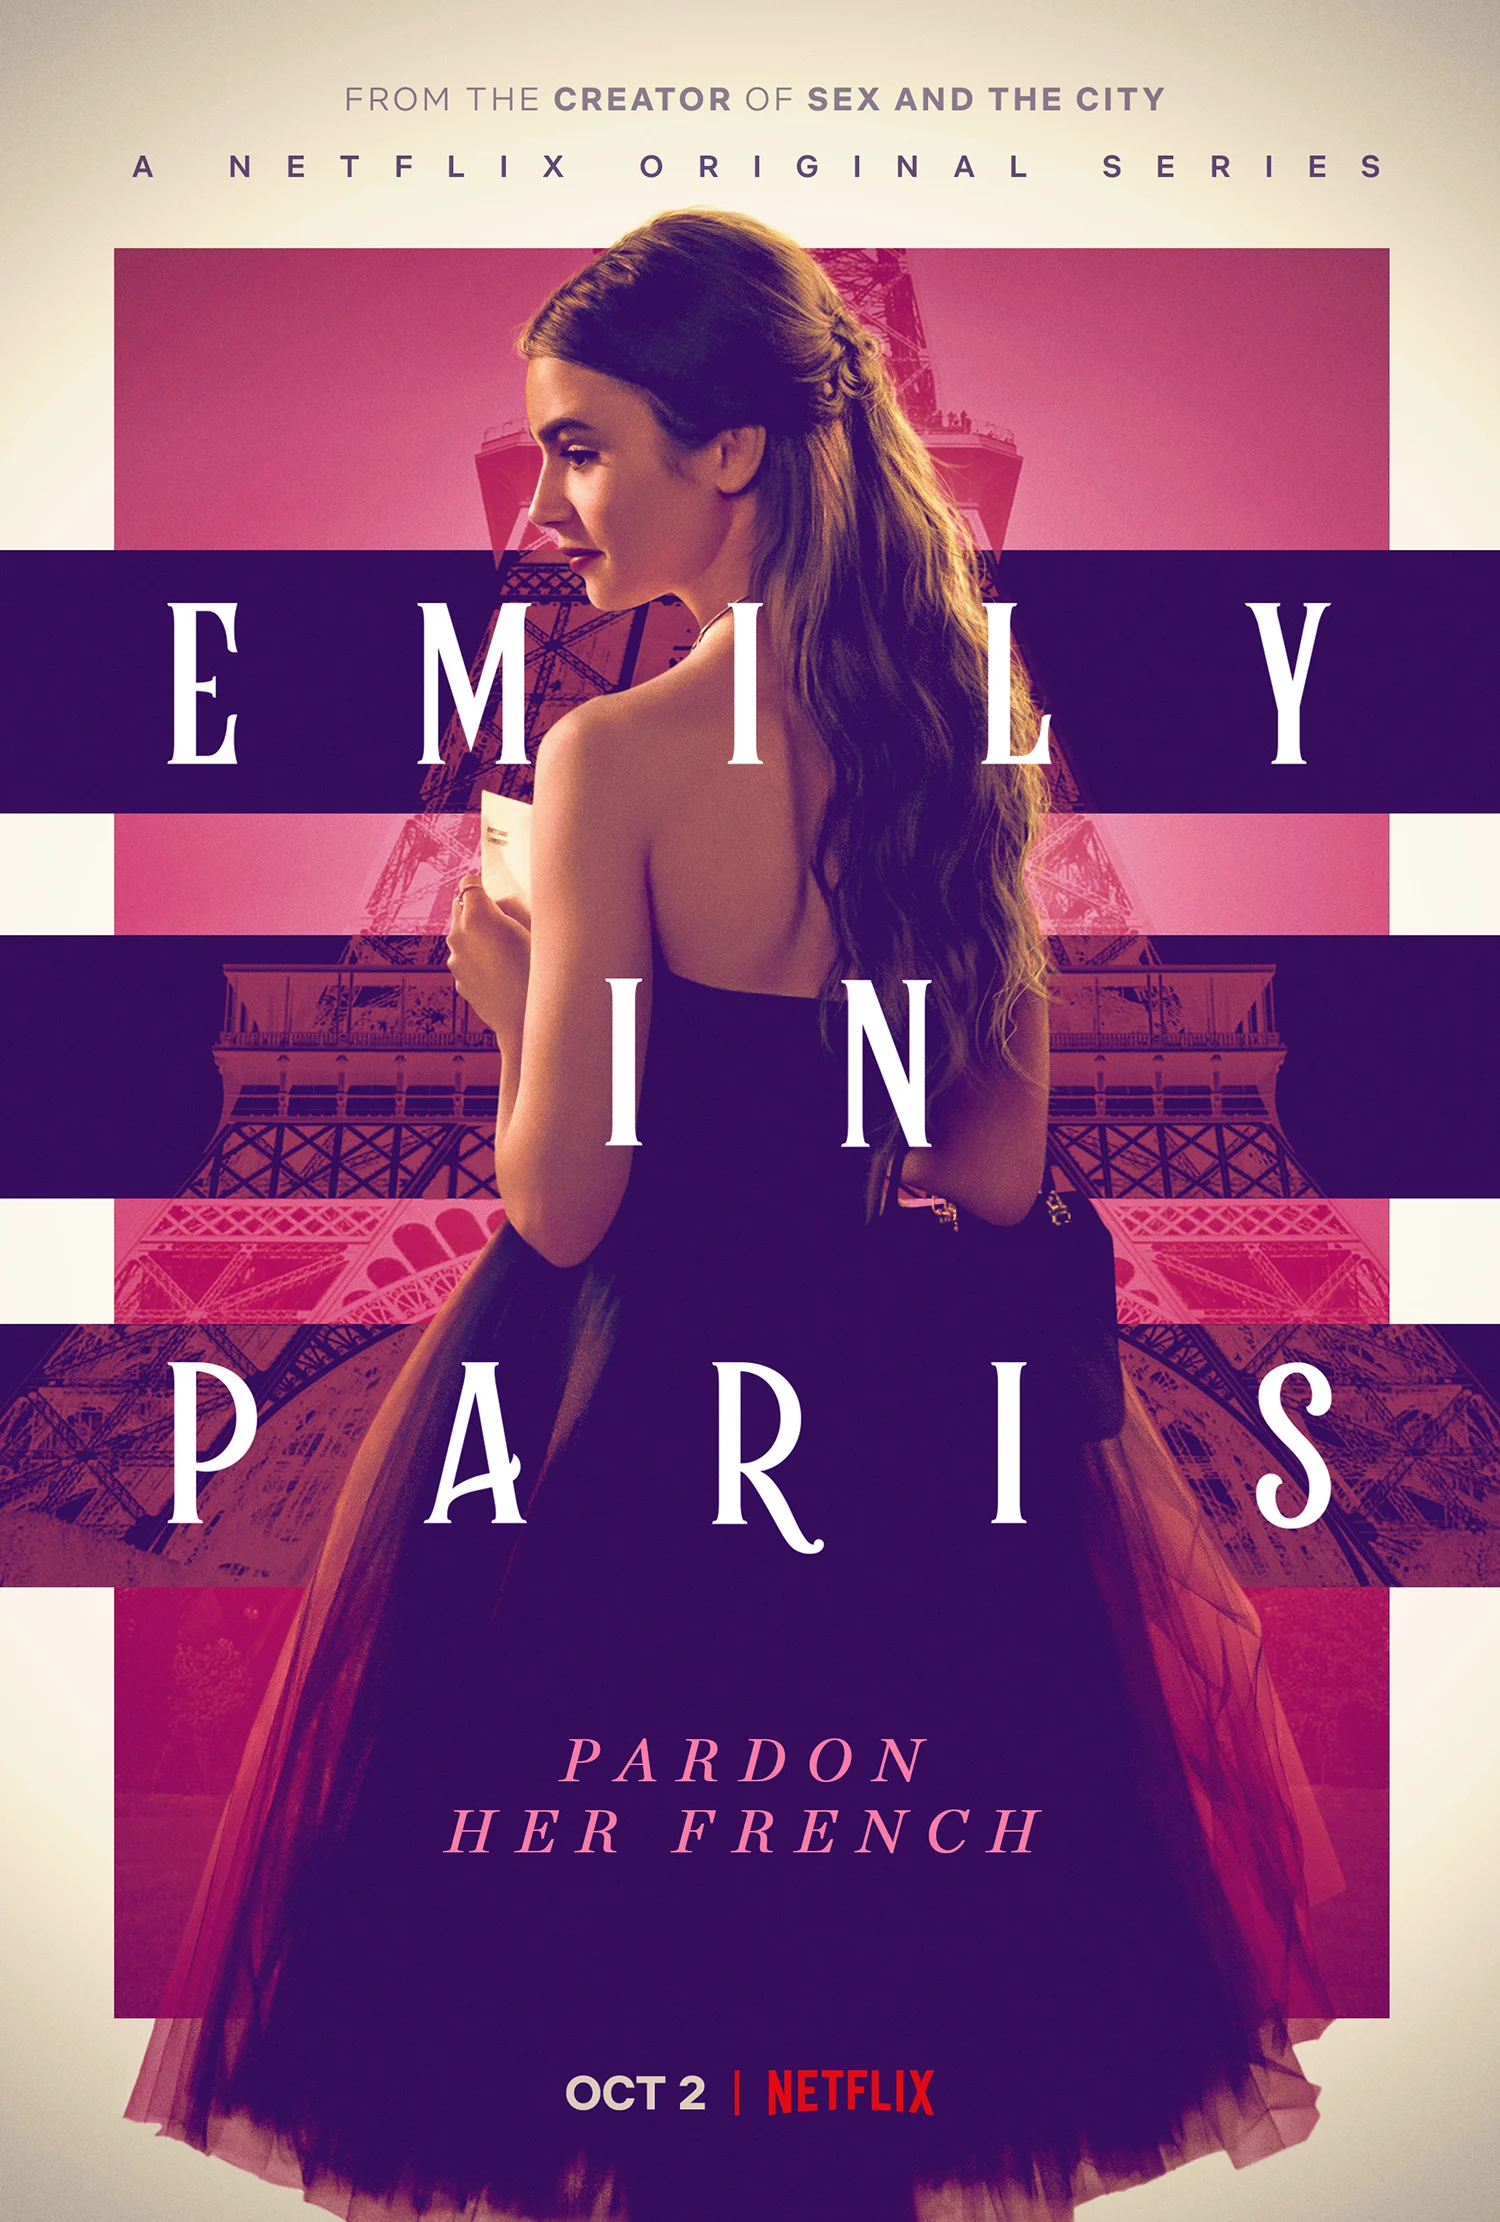 Emily in Paris: What Happens in Season 1?